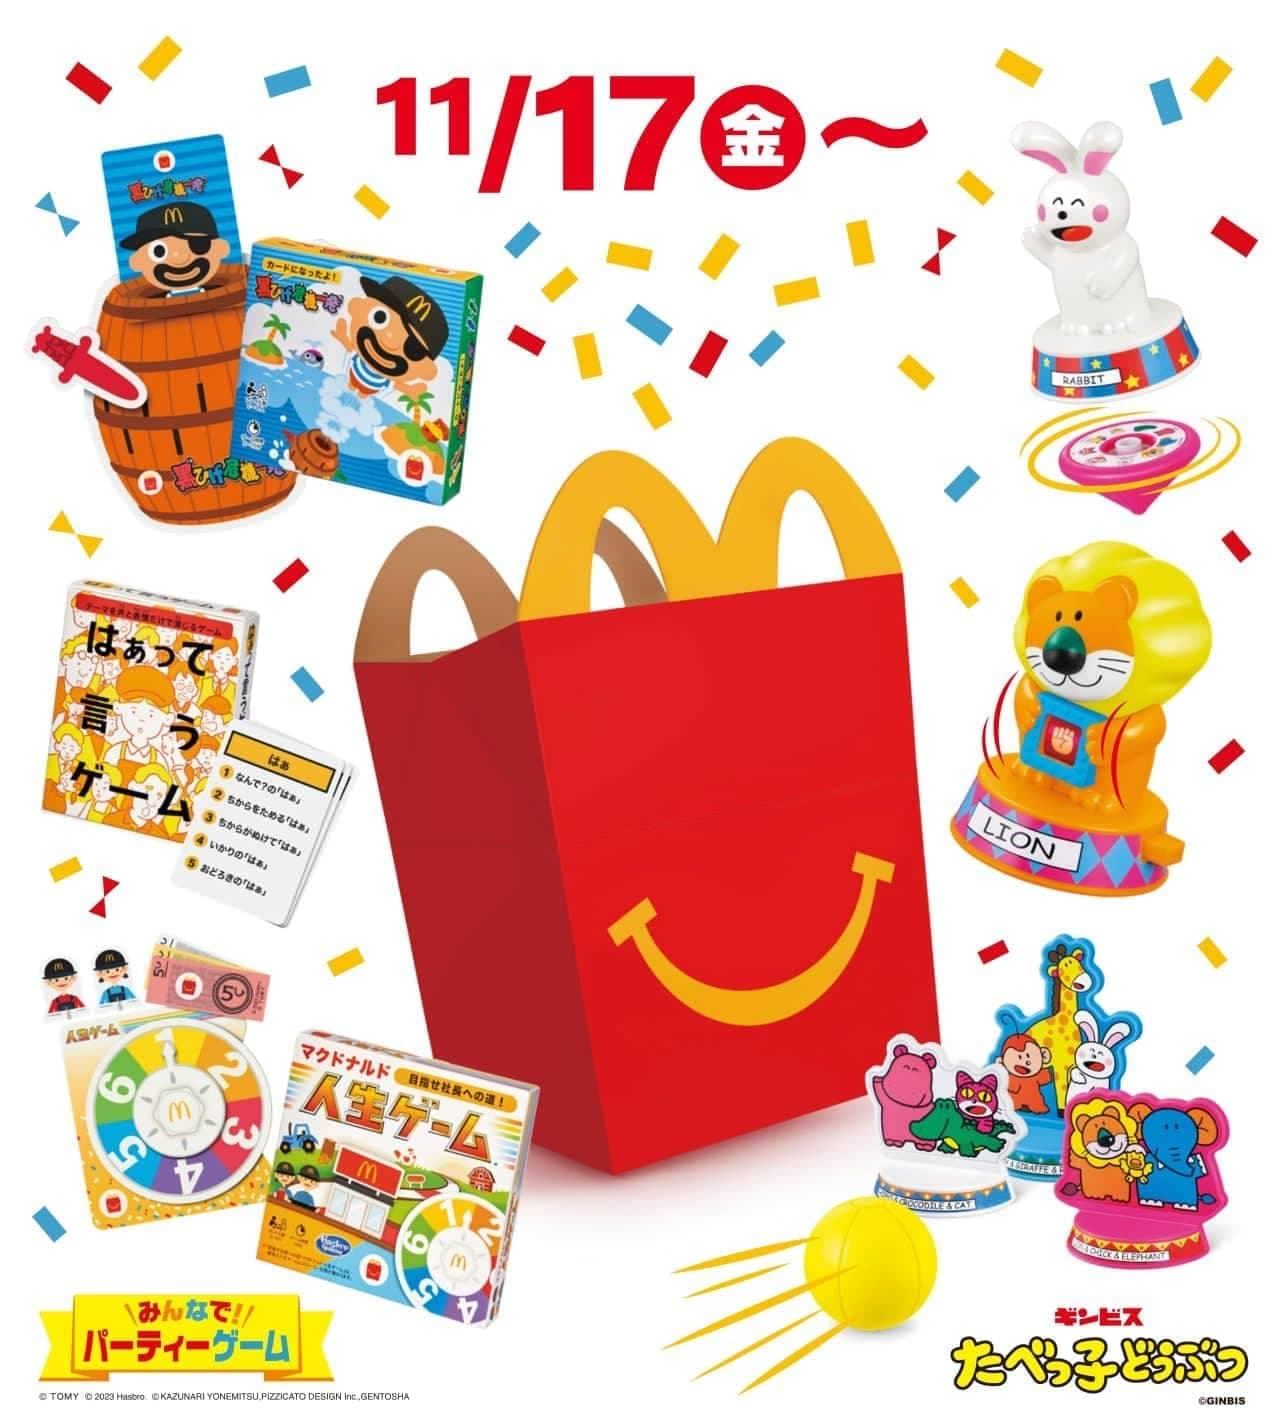 McDonald's Happy Set "Minna de! Party Game" and "Tabekko Dobutsu